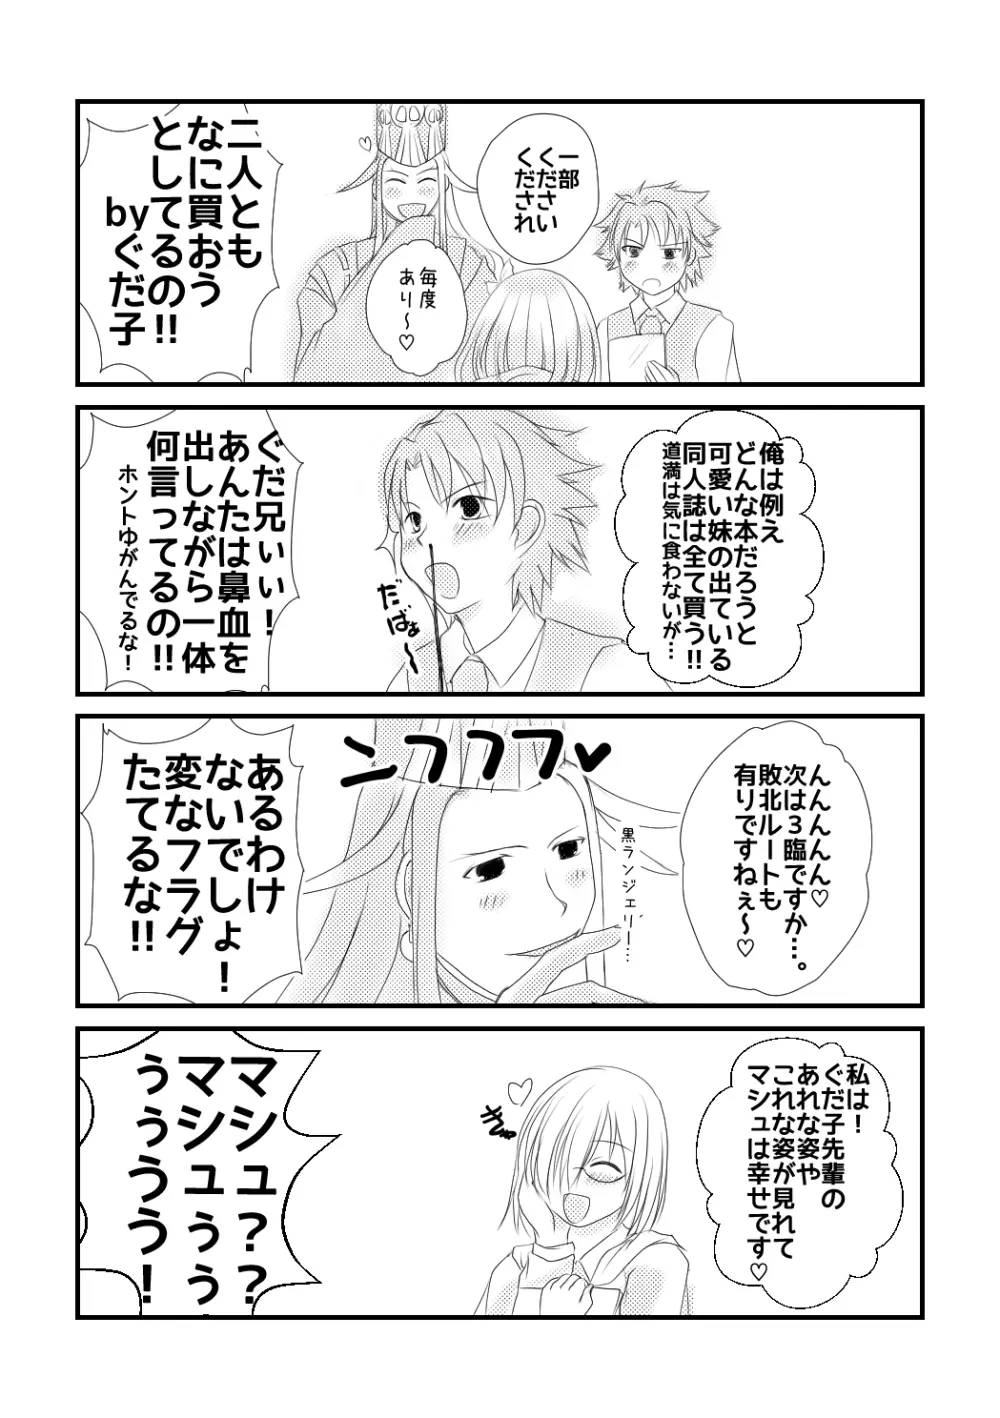 ] Rin guda ♀ rakugaki guda yuru manga(Fate/Grand Order] 7ページ